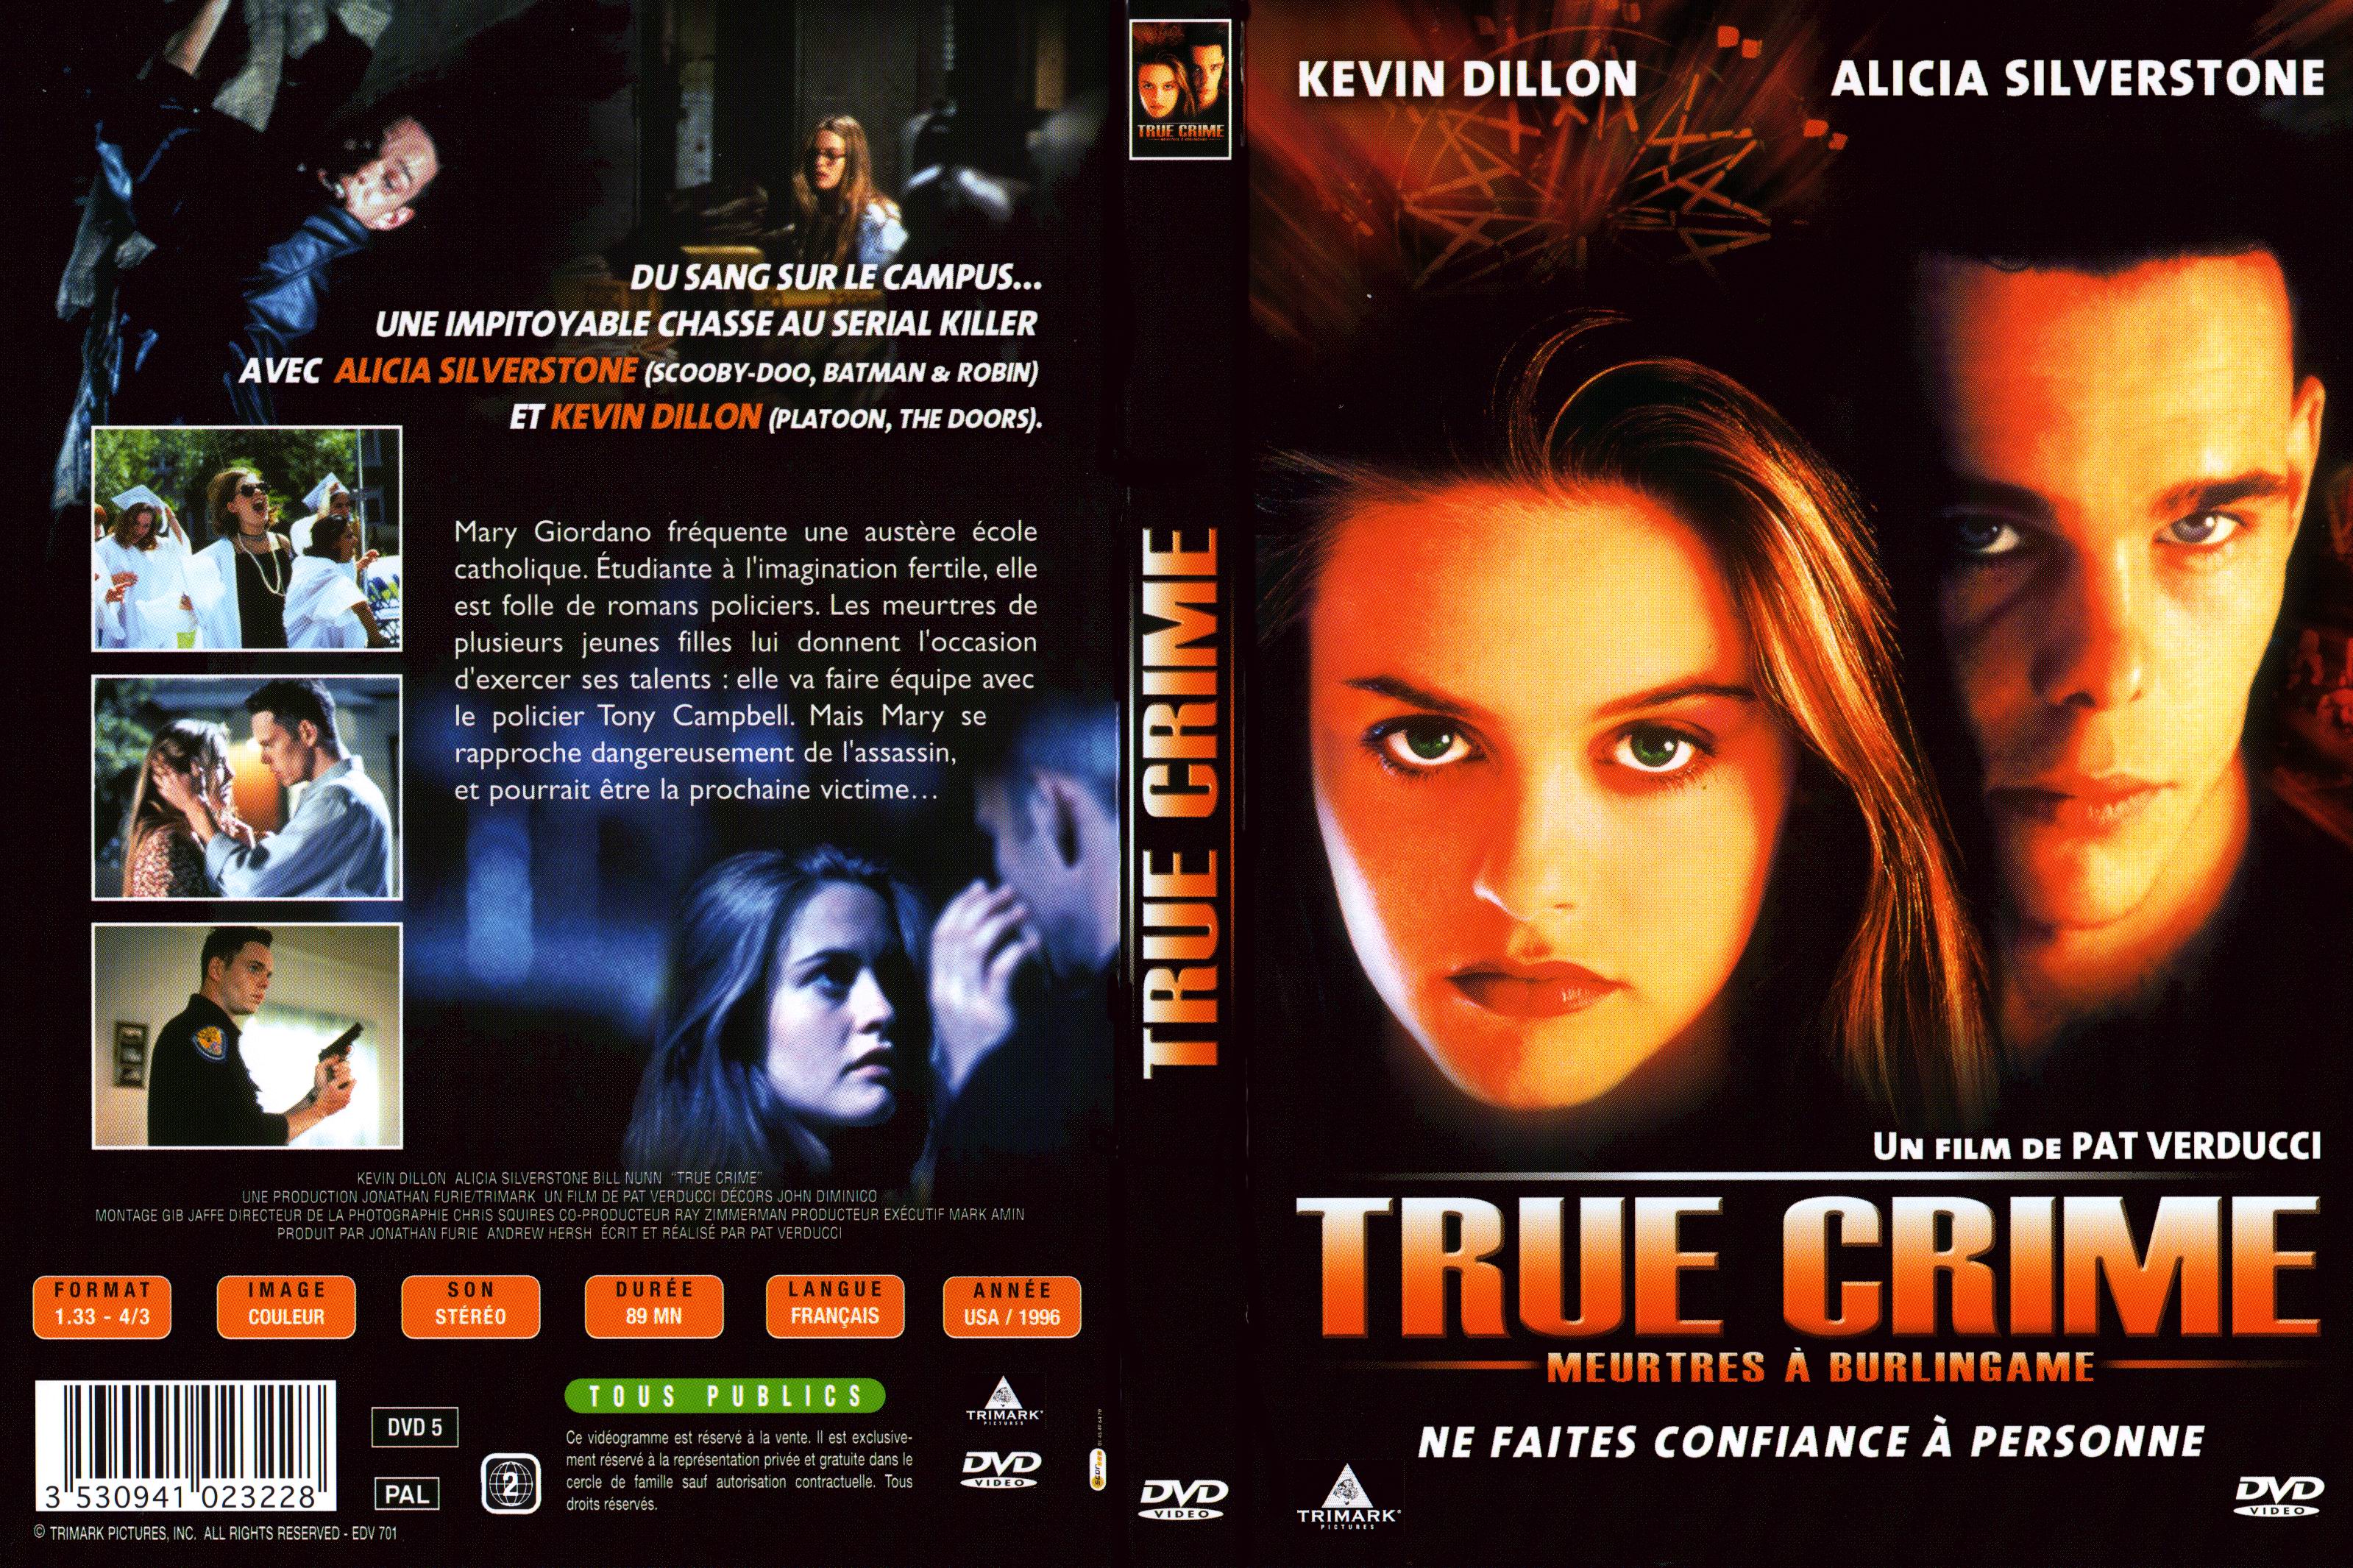 Jaquette DVD True crime